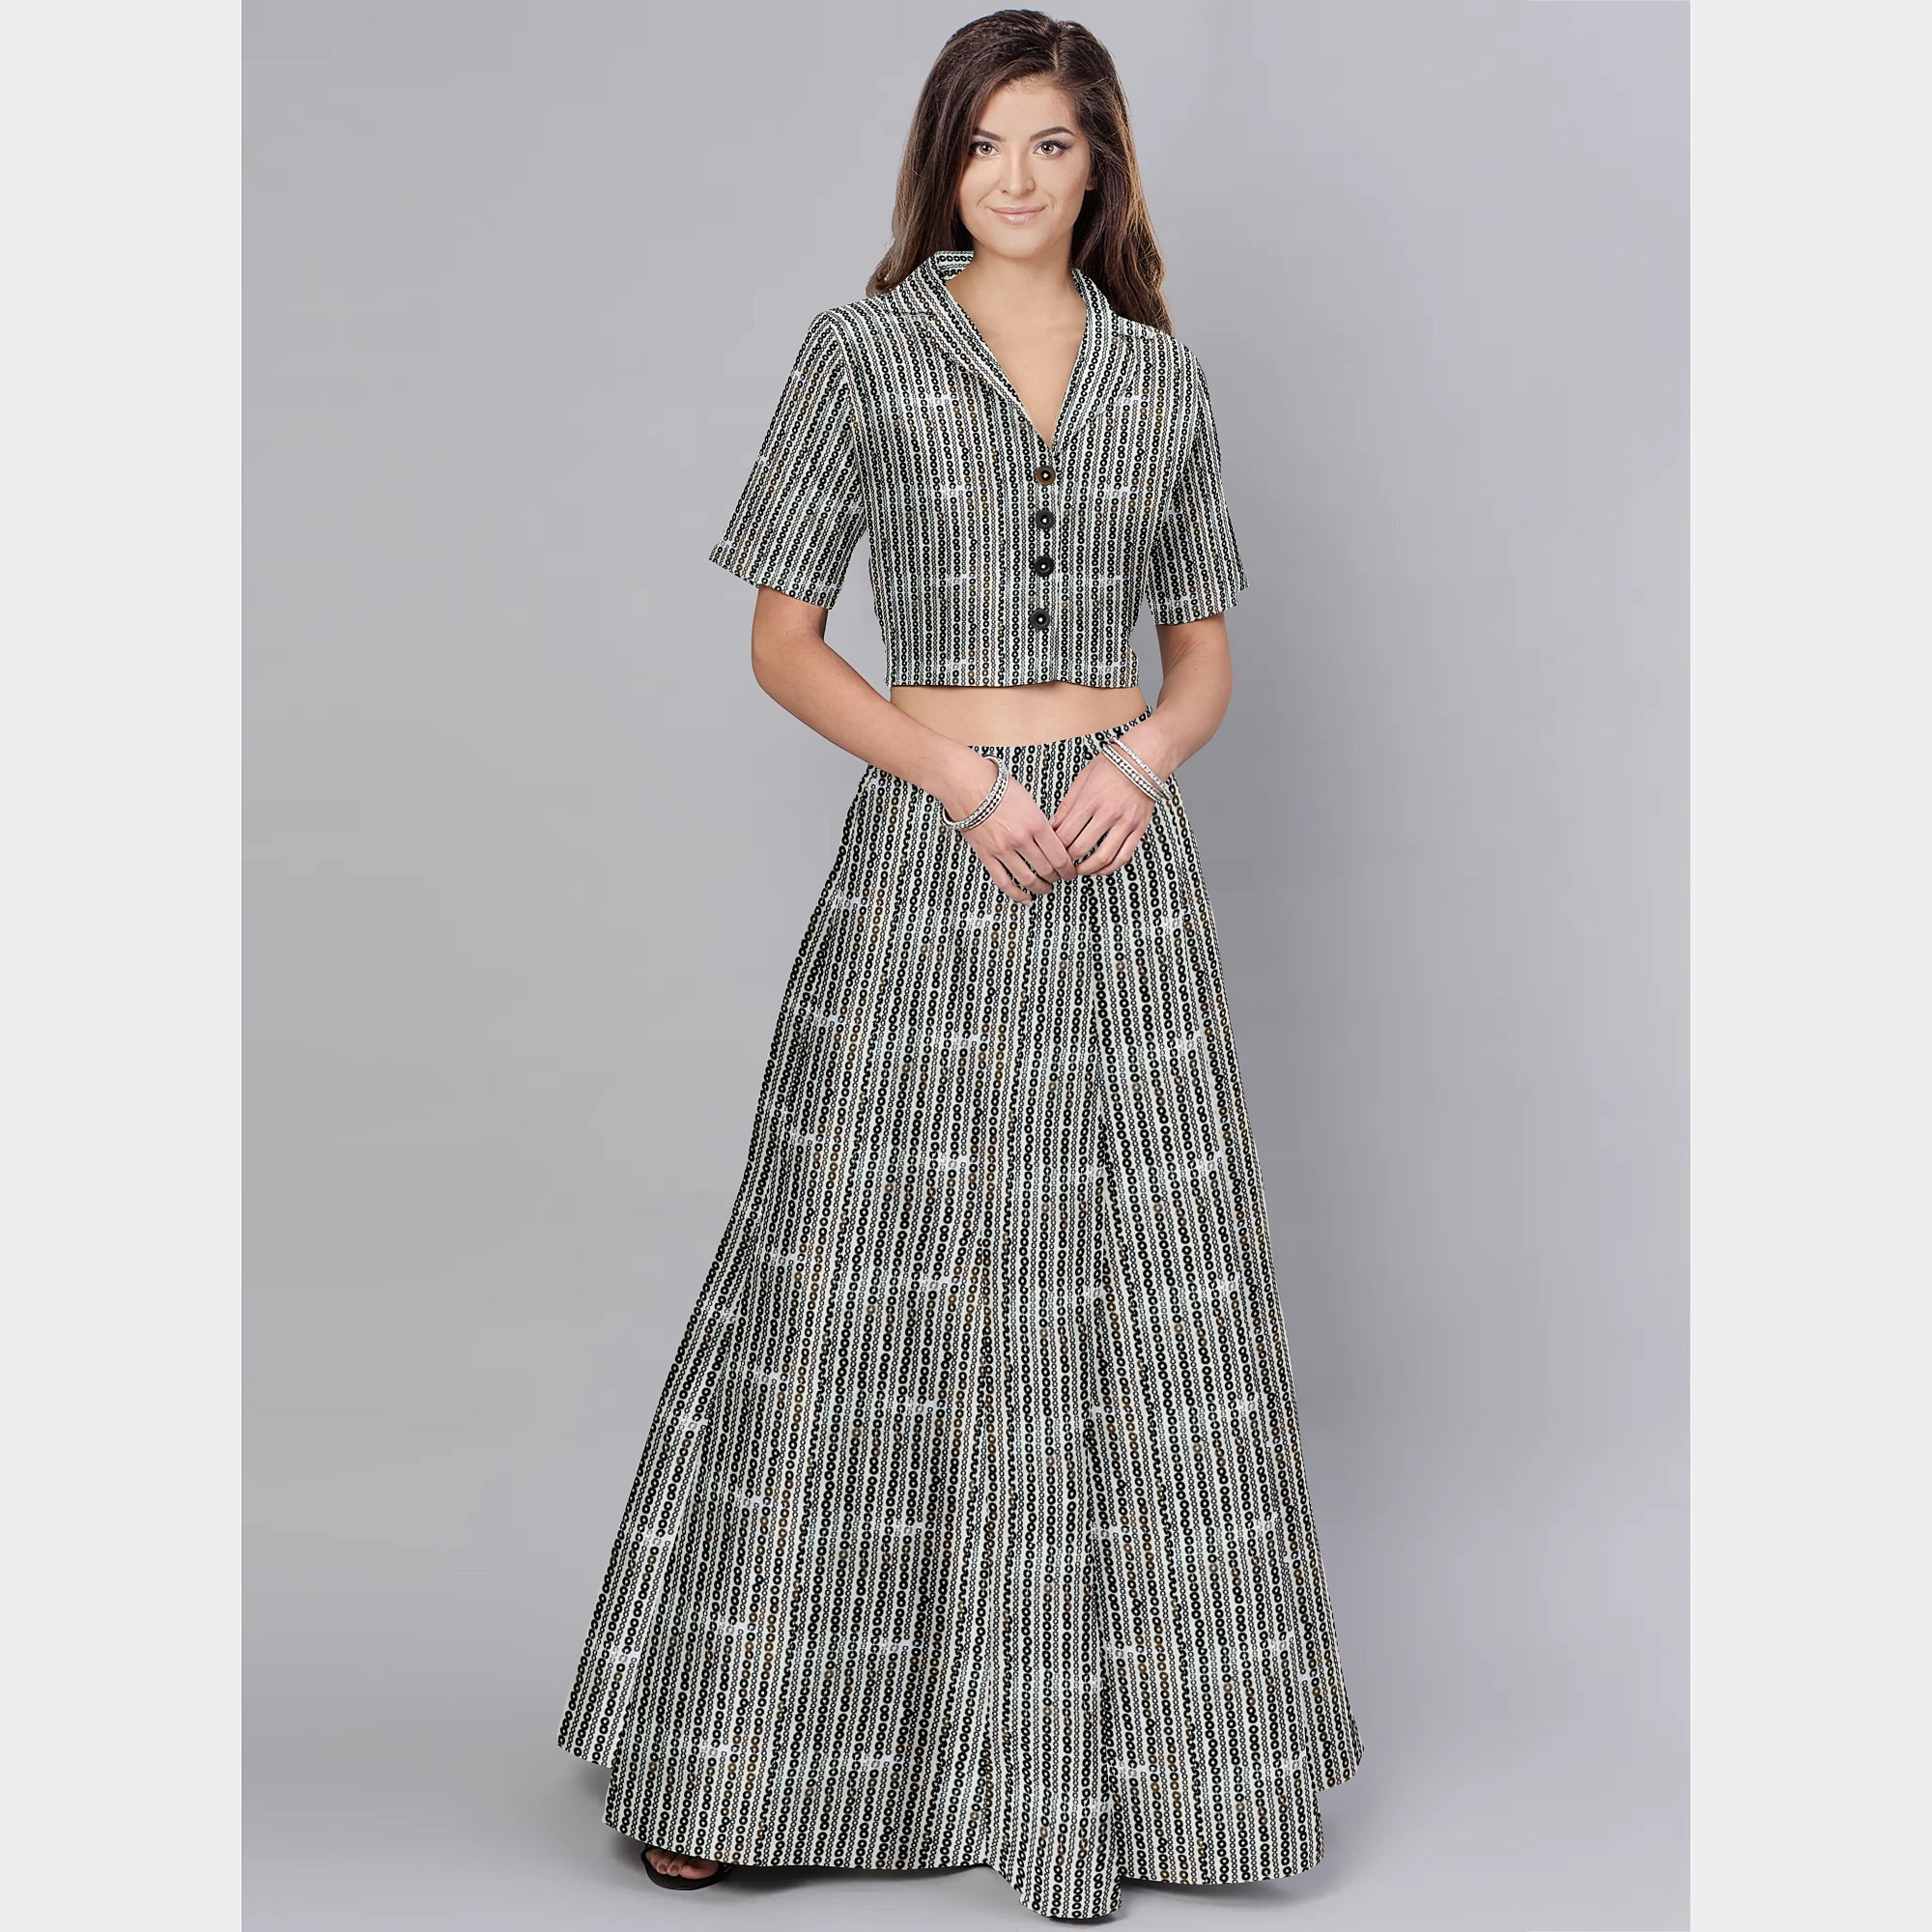 Buy Tandul Women Trendy Bodycon Dress Above Knee Length Lycra Fabric Fabric  Orange Dress, Size-L (7247) at Amazon.in